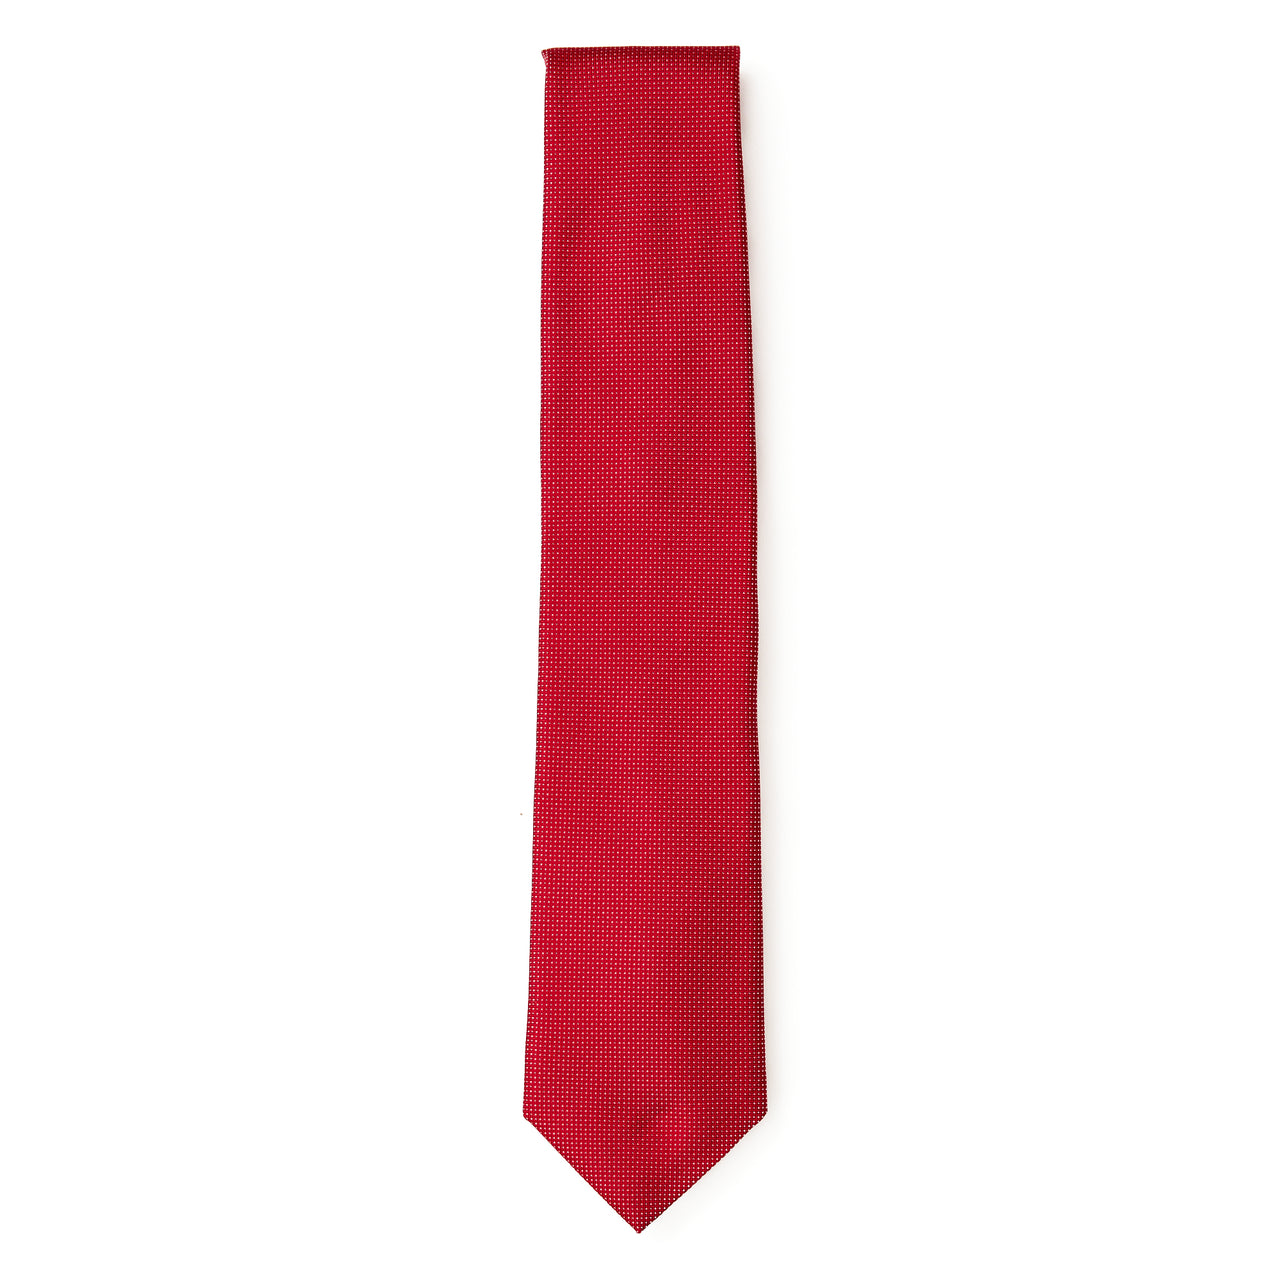 HENRY SARTORIAL x HEMLEY Printed Tie RED/WHITE